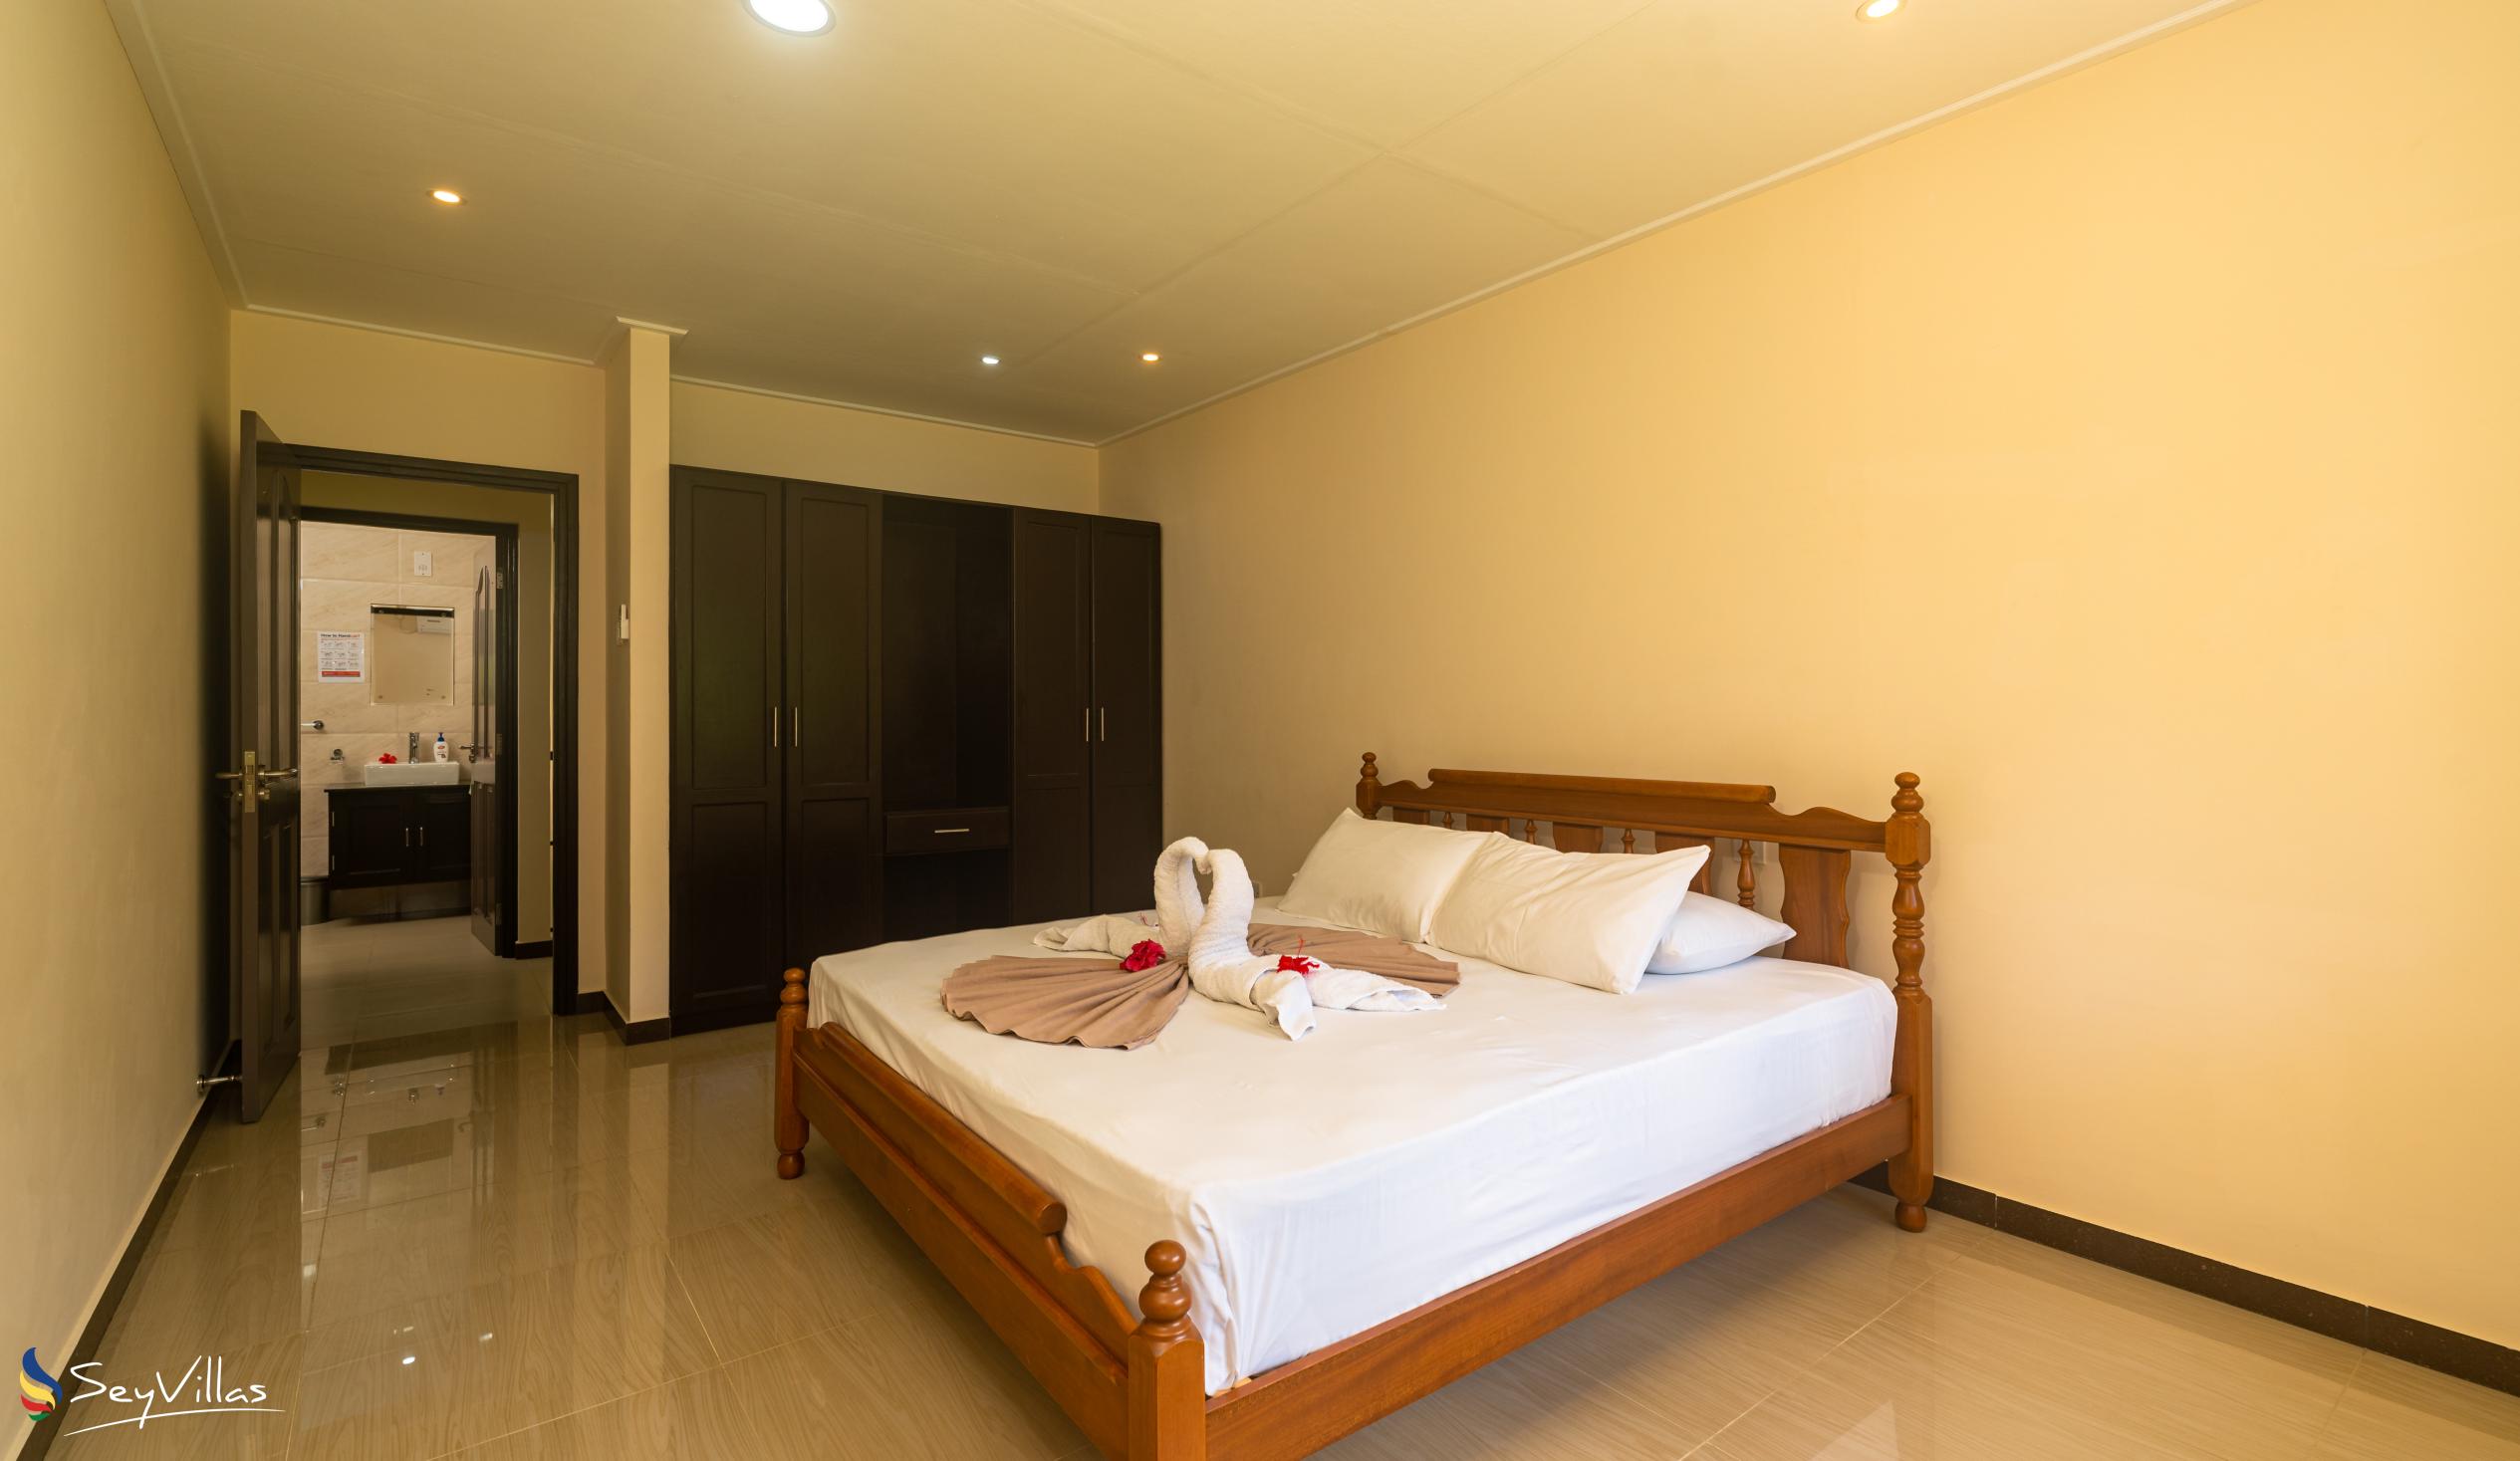 Foto 53: JAIDSS Holiday Apartments - Appartamento con 2 camere - Mahé (Seychelles)